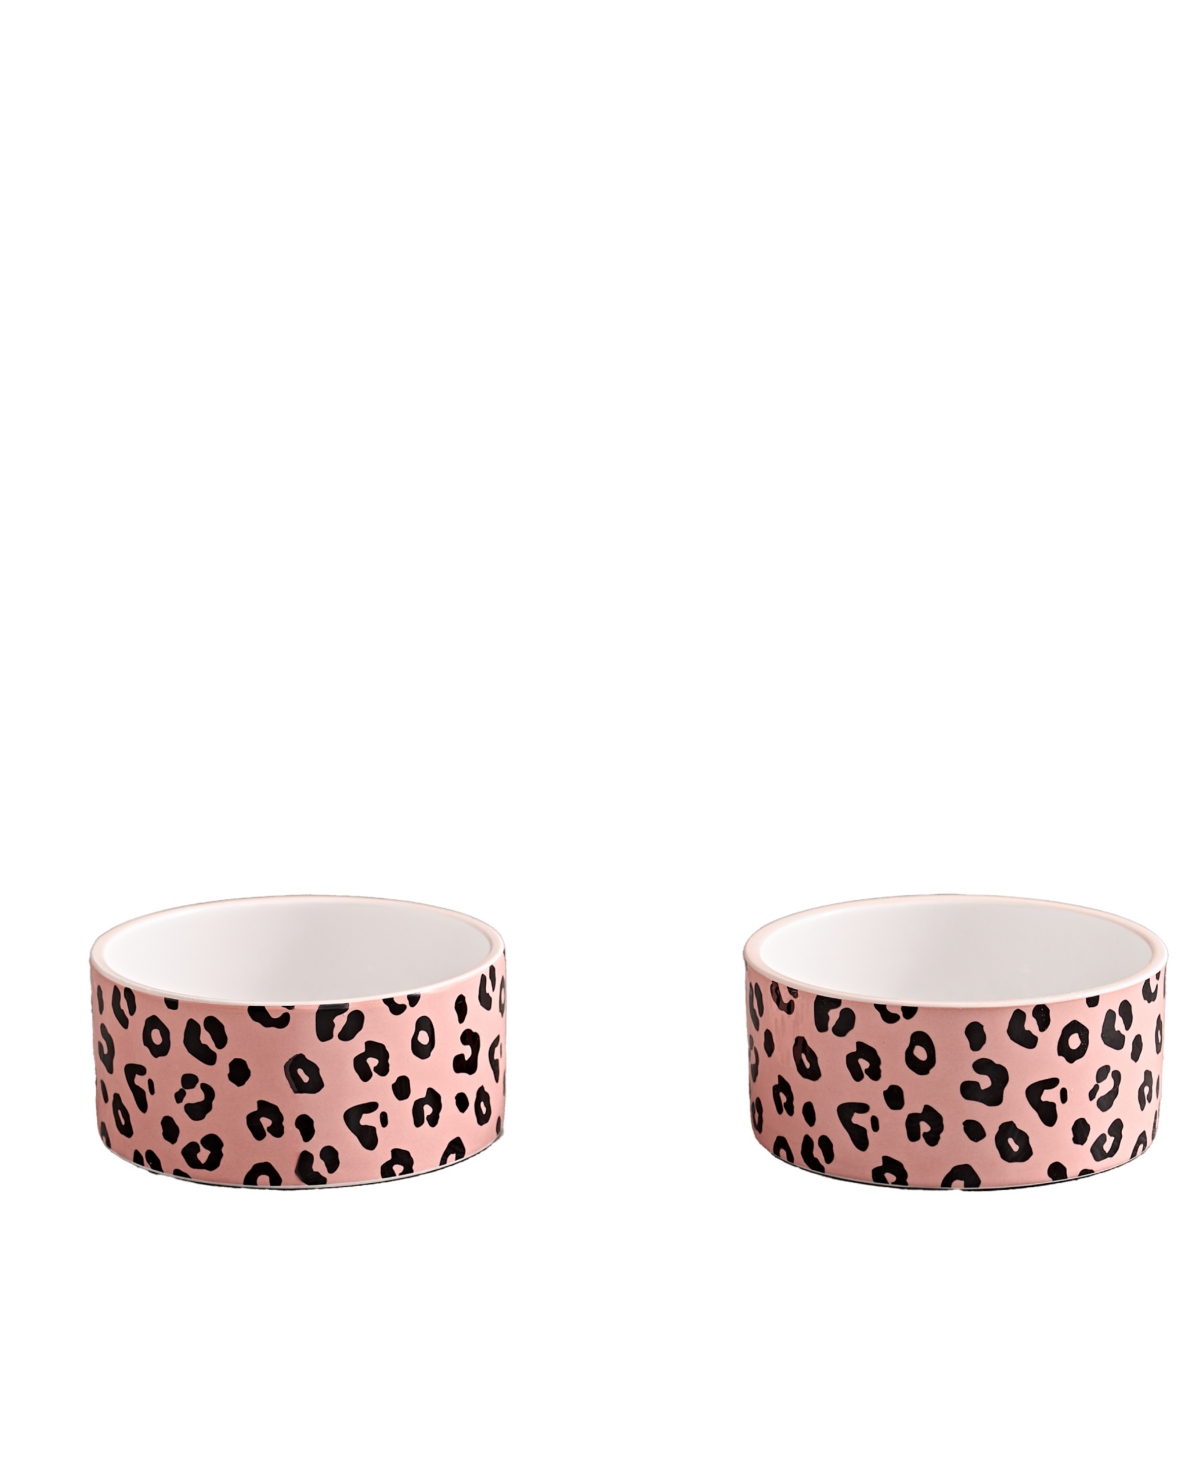 Give Me Treats Pet Bowl Leopard 16 oz Ceramic Bowls, Set of 2 - Pink